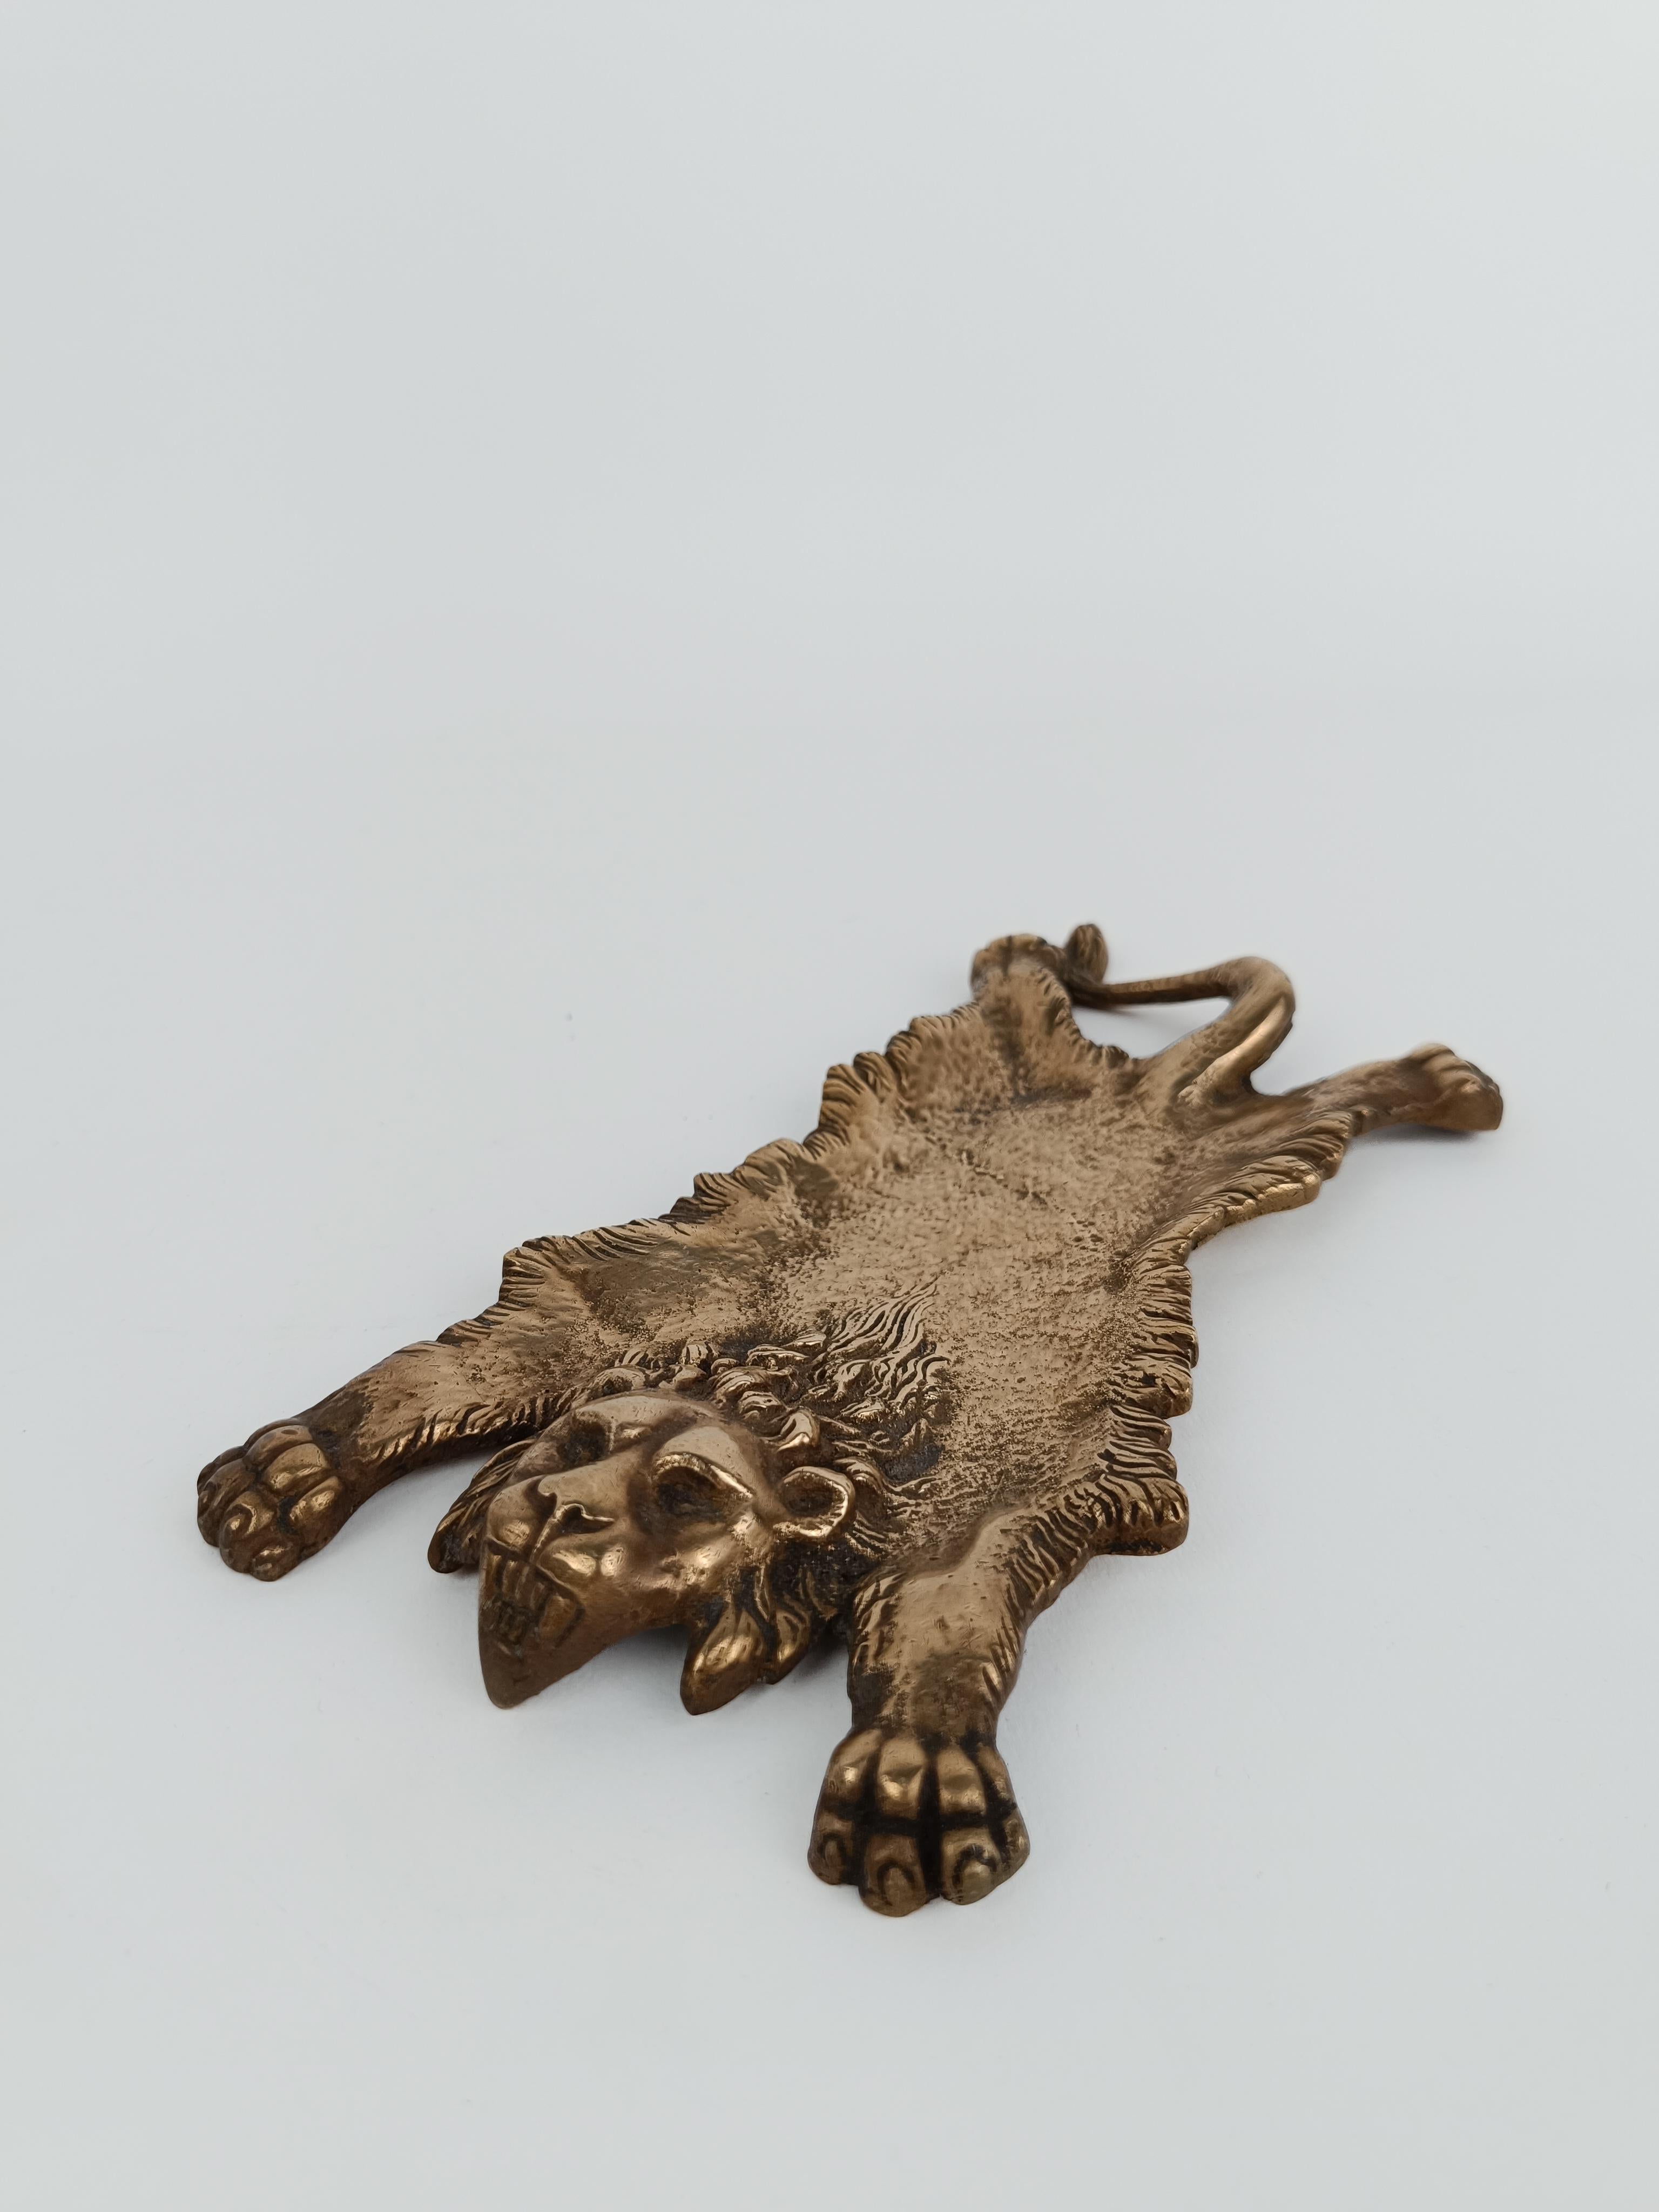 Vintage Brass Ashtray Depicting the Mythological Nemean Lion Skin, Italy 1970s For Sale 2